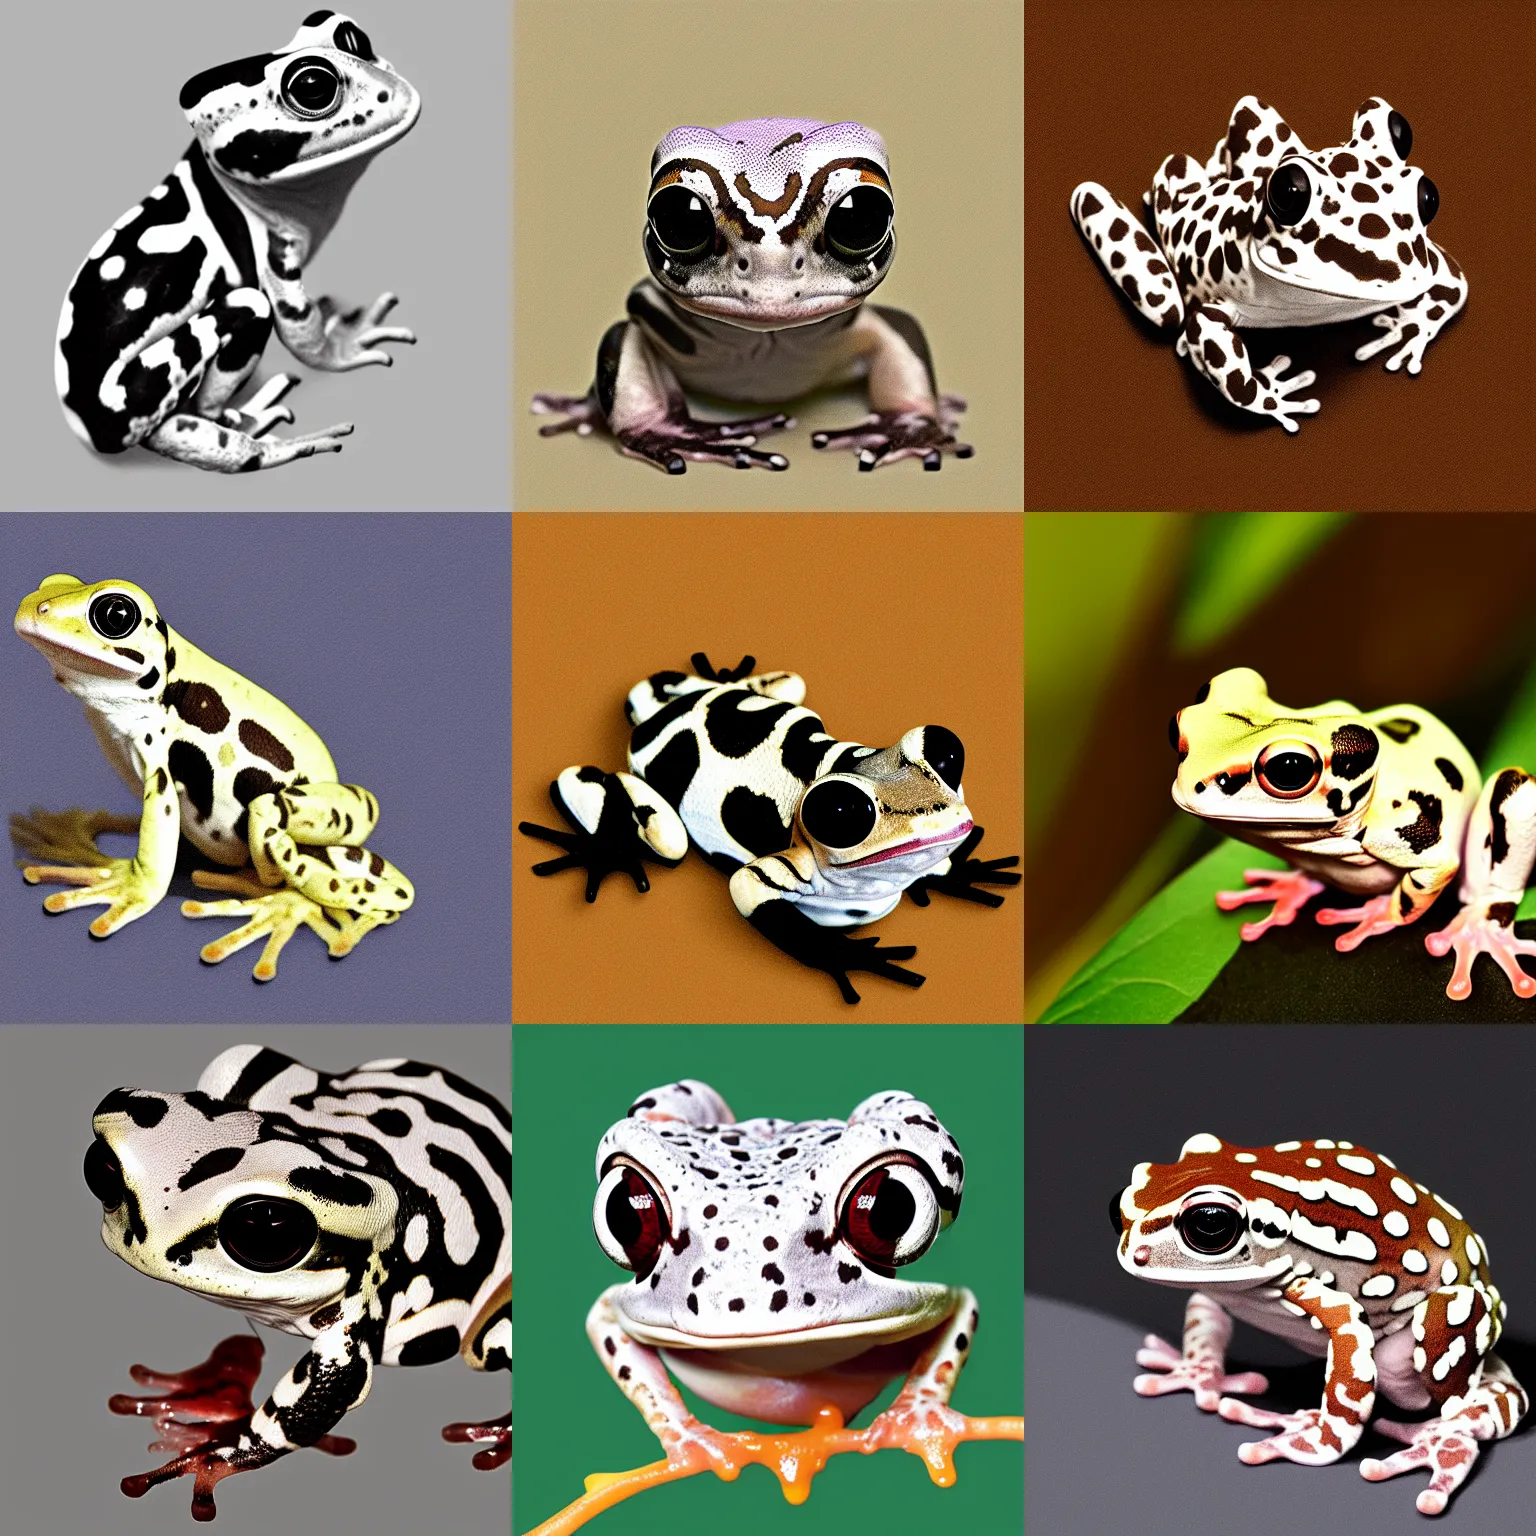 Prompt: Amazon milk frog, digital art, minimalist